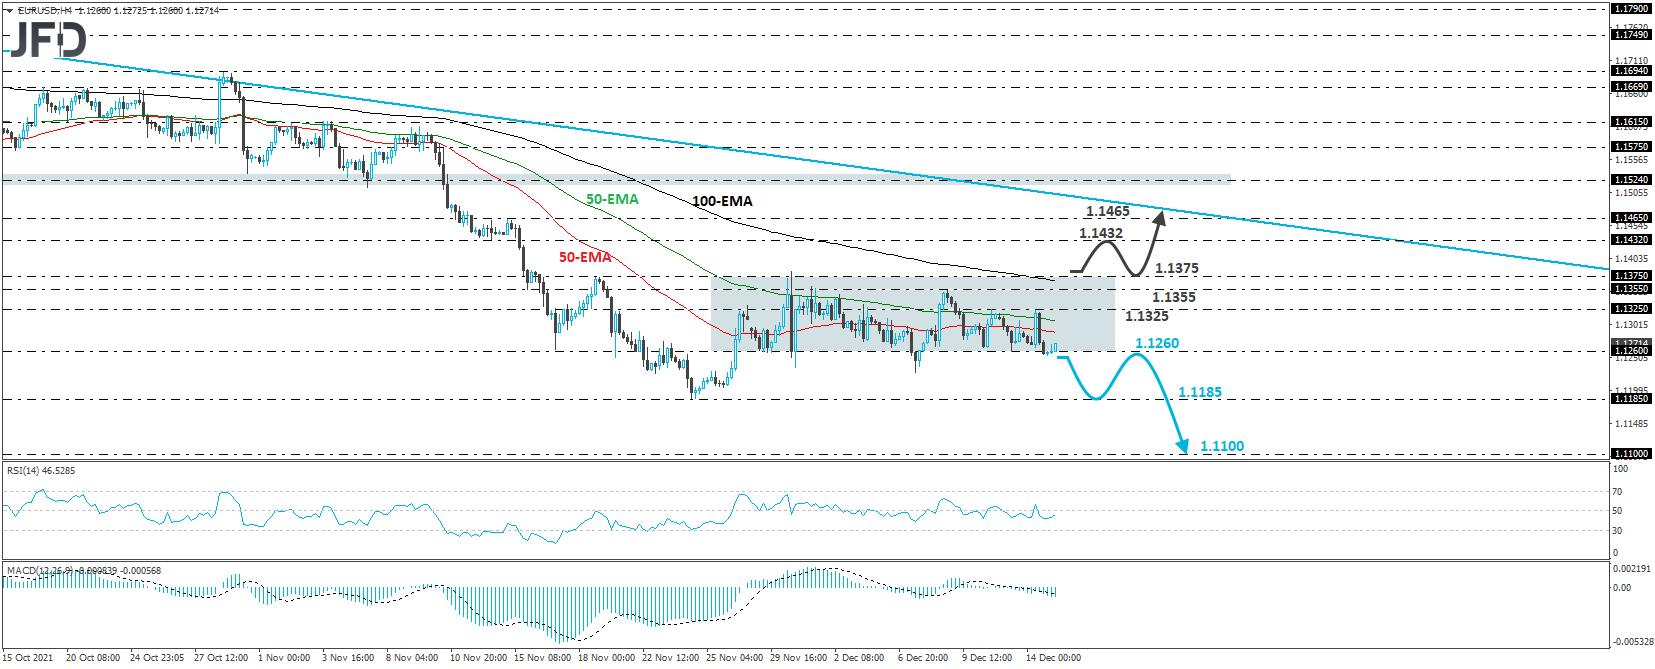 EUR/USD 4-hour chart technical analysis.